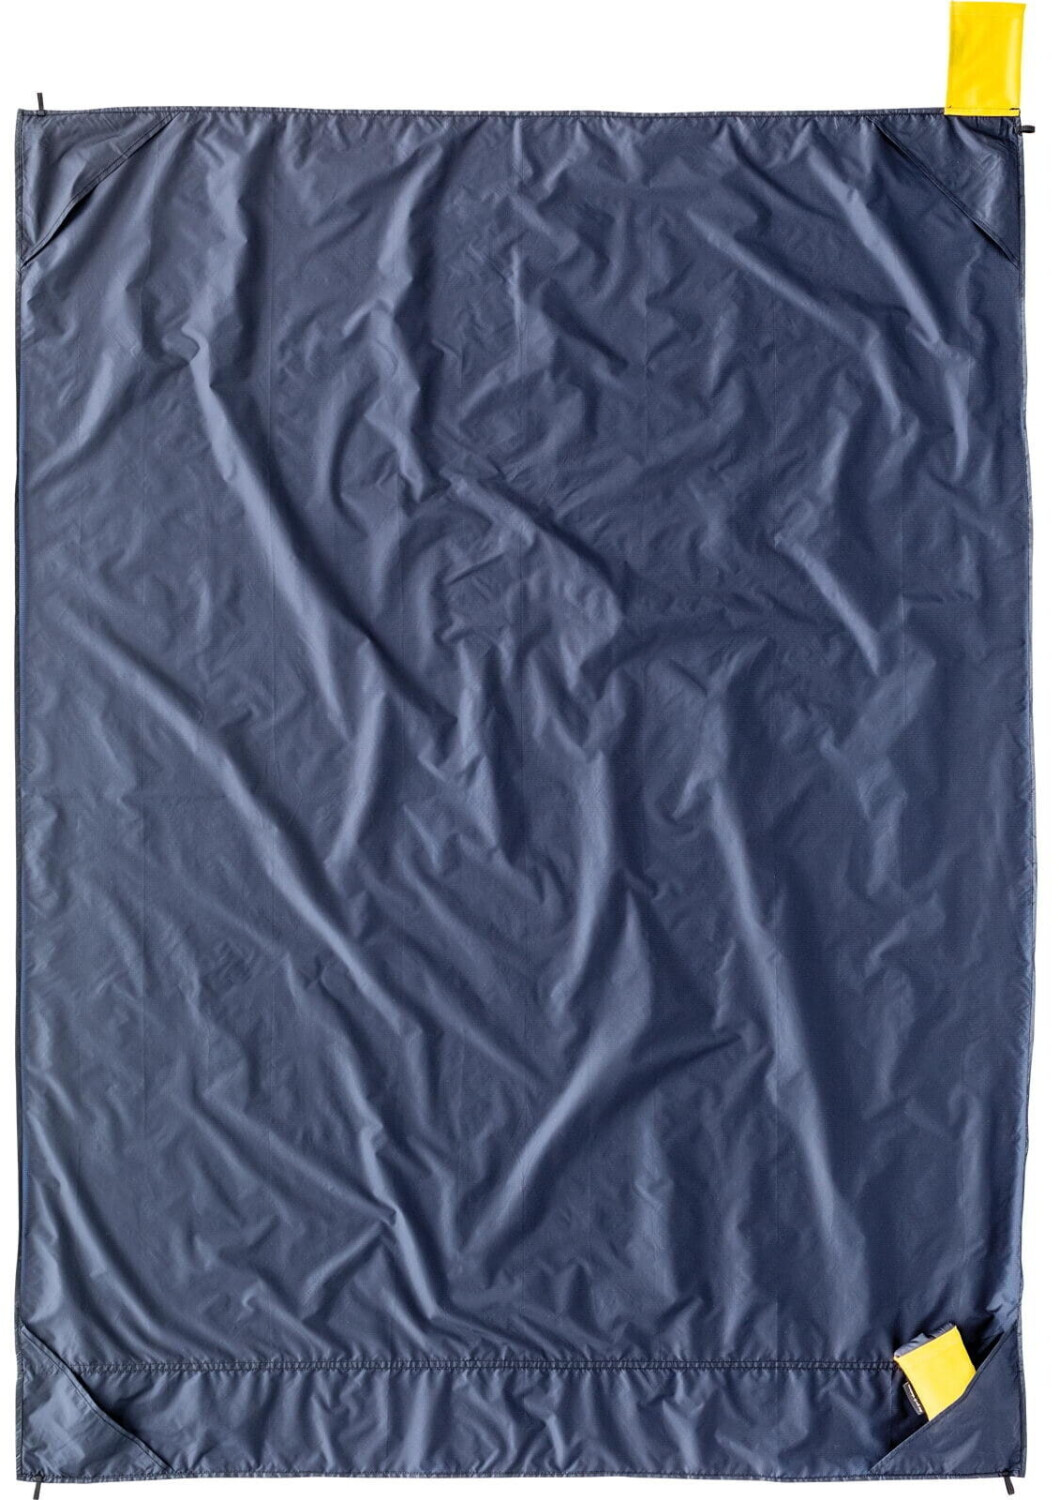 Photos - Sleeping Bag Cocoon Picnic/Outdoor/Festival Blanket Midnight Blue 